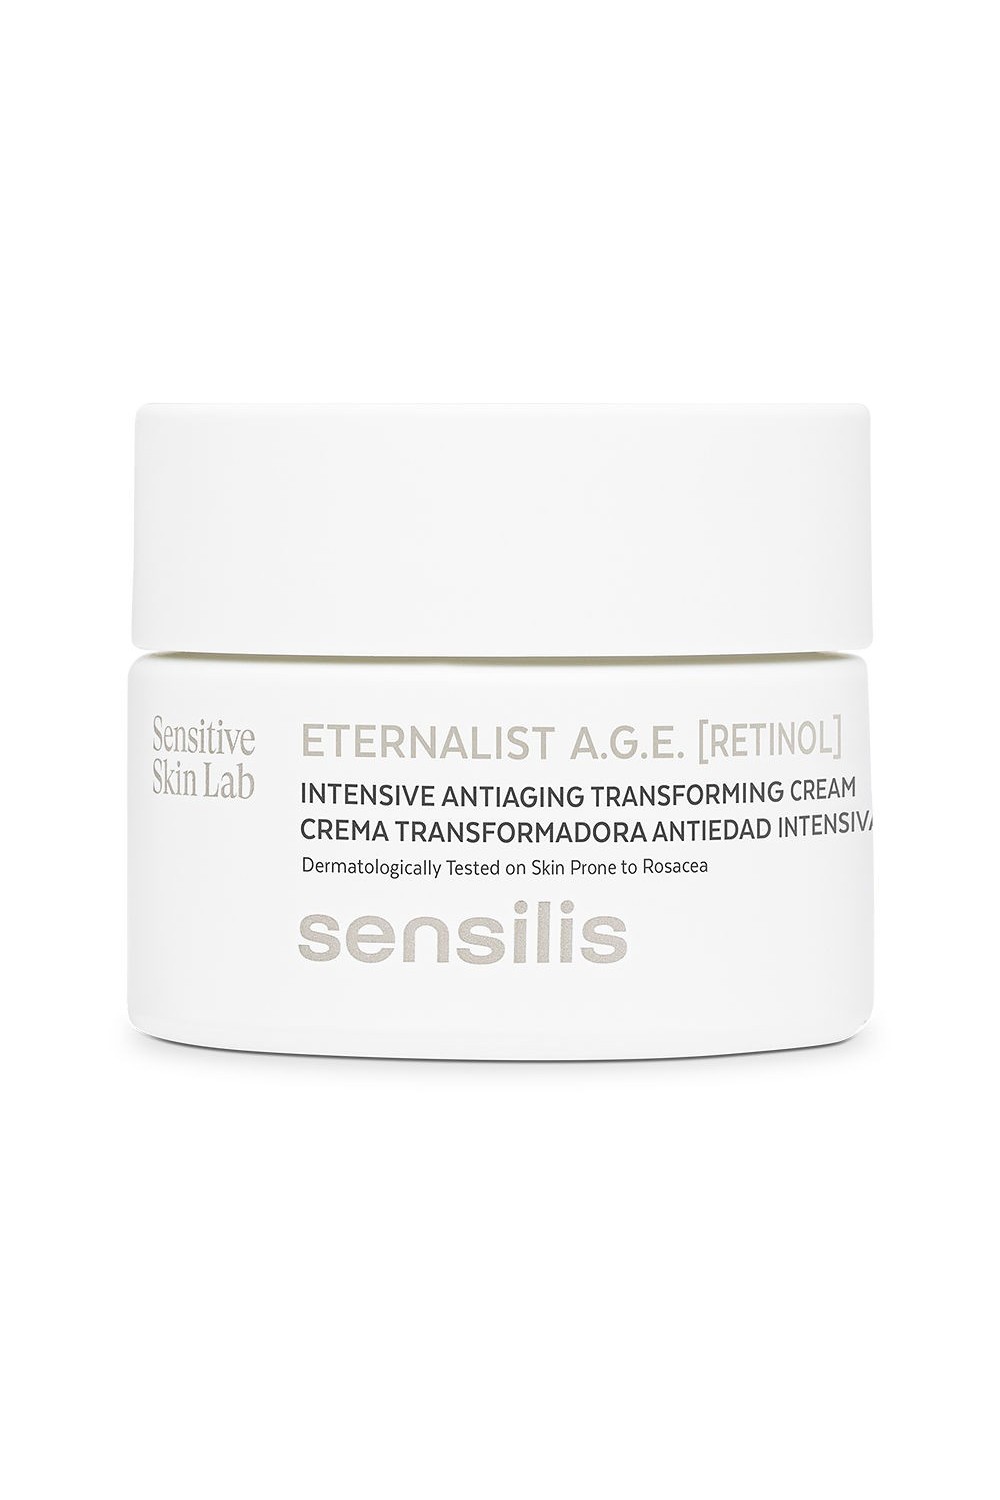 Sensilis Eternalist Age Retinol Transforming Anti-Ageing Cream 50ml